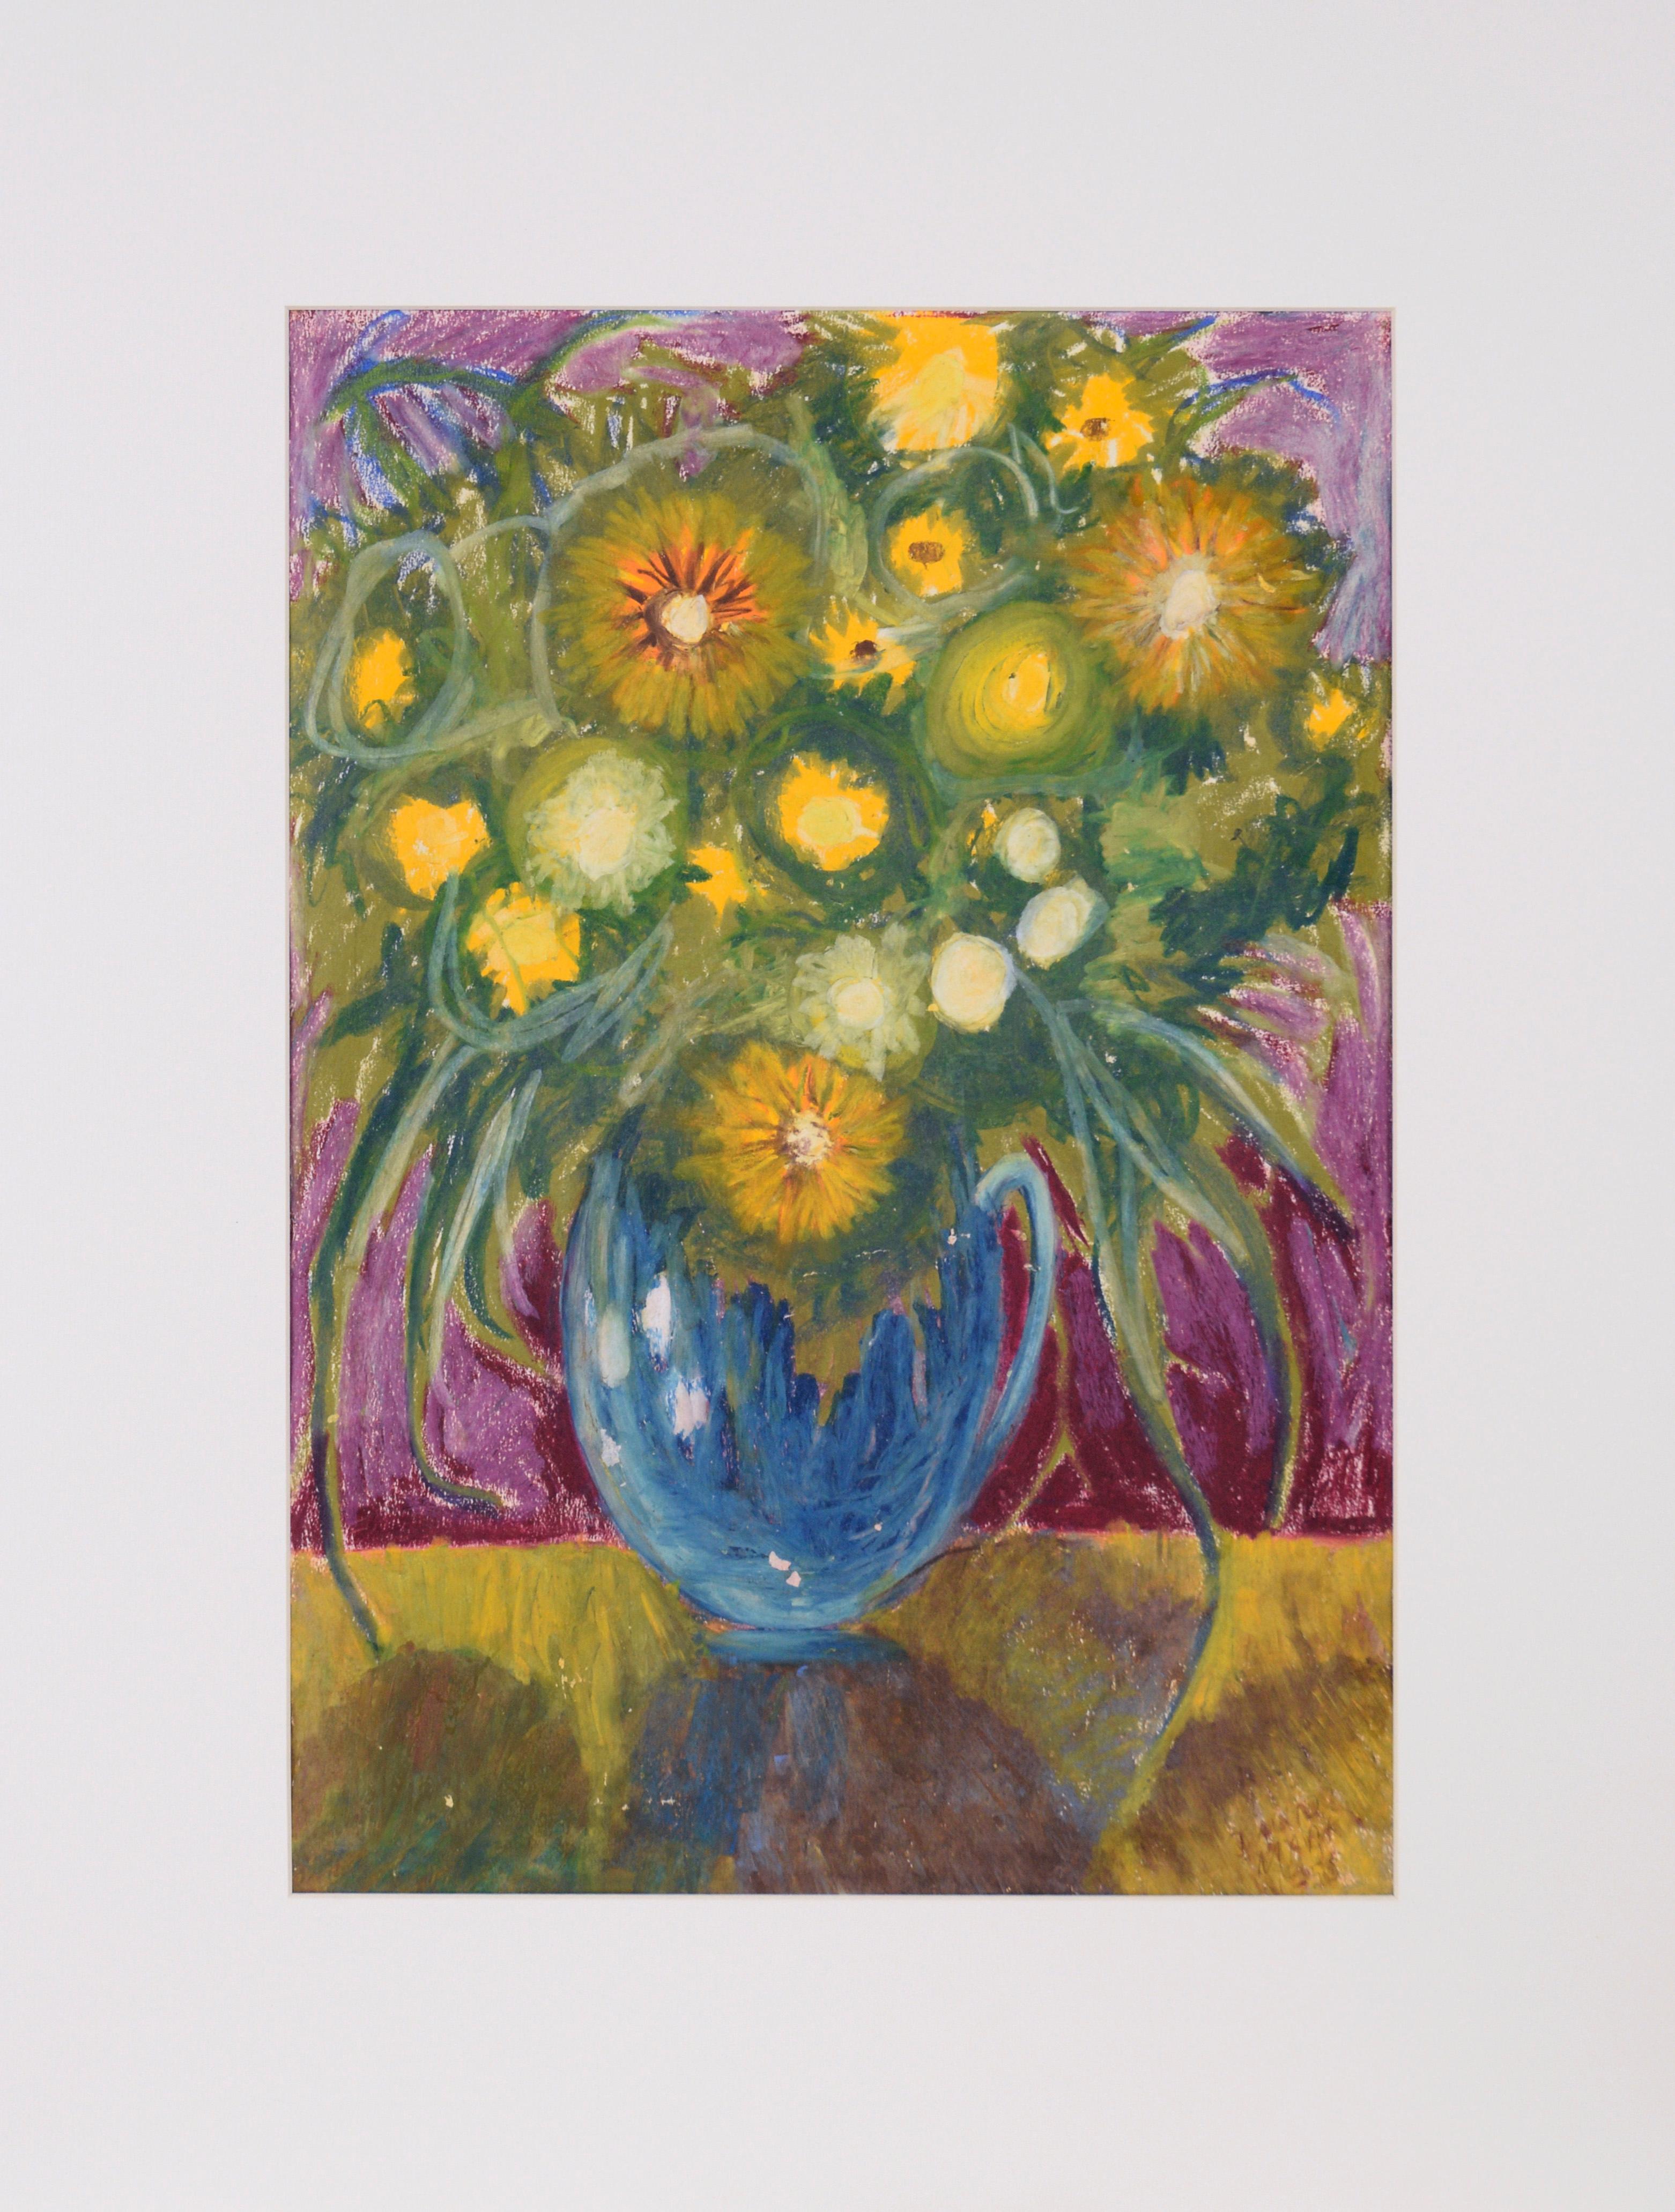 David Mark Still-Life - Daisies and Sunflowers - Still Life Oil Pastel on Paper